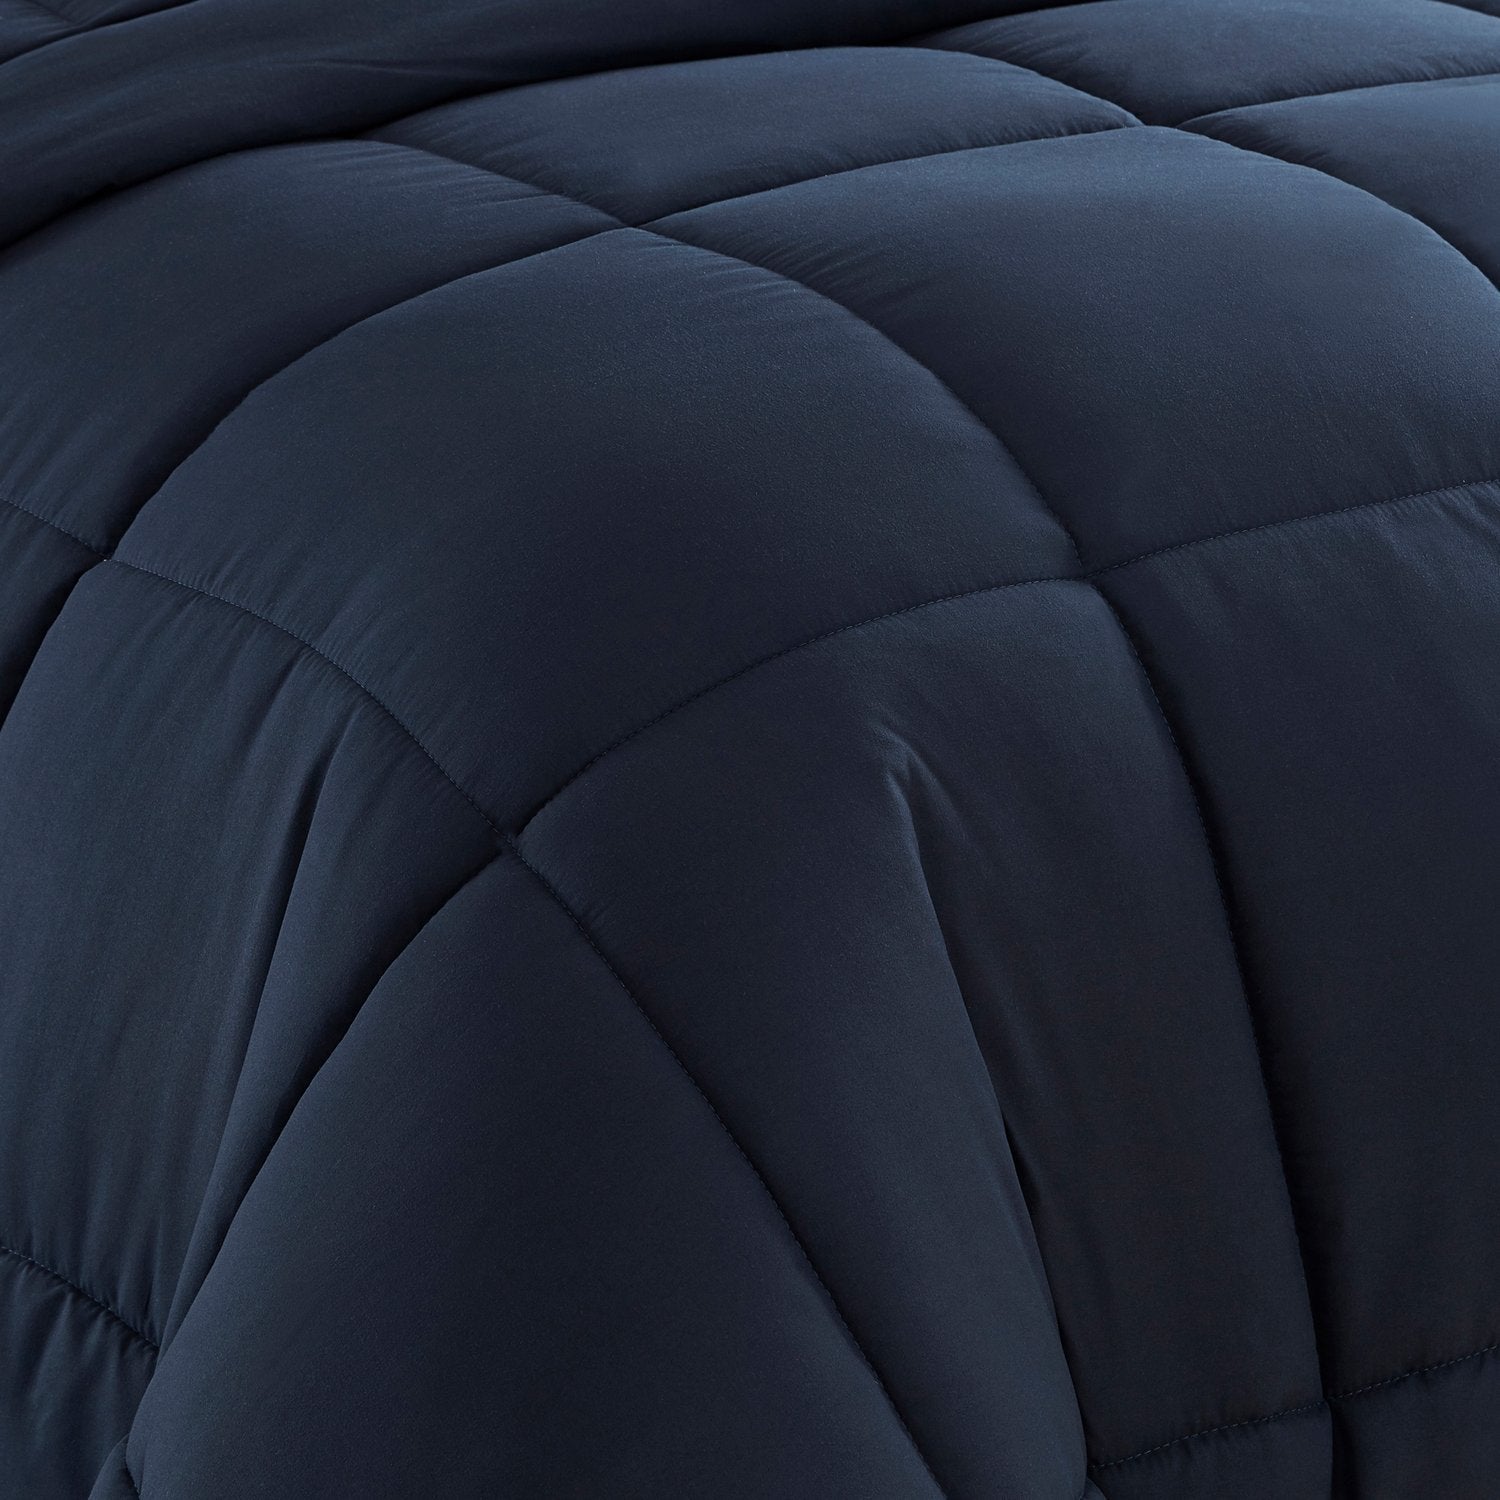 Down Alternative Comforter Navy - Comforter Detail